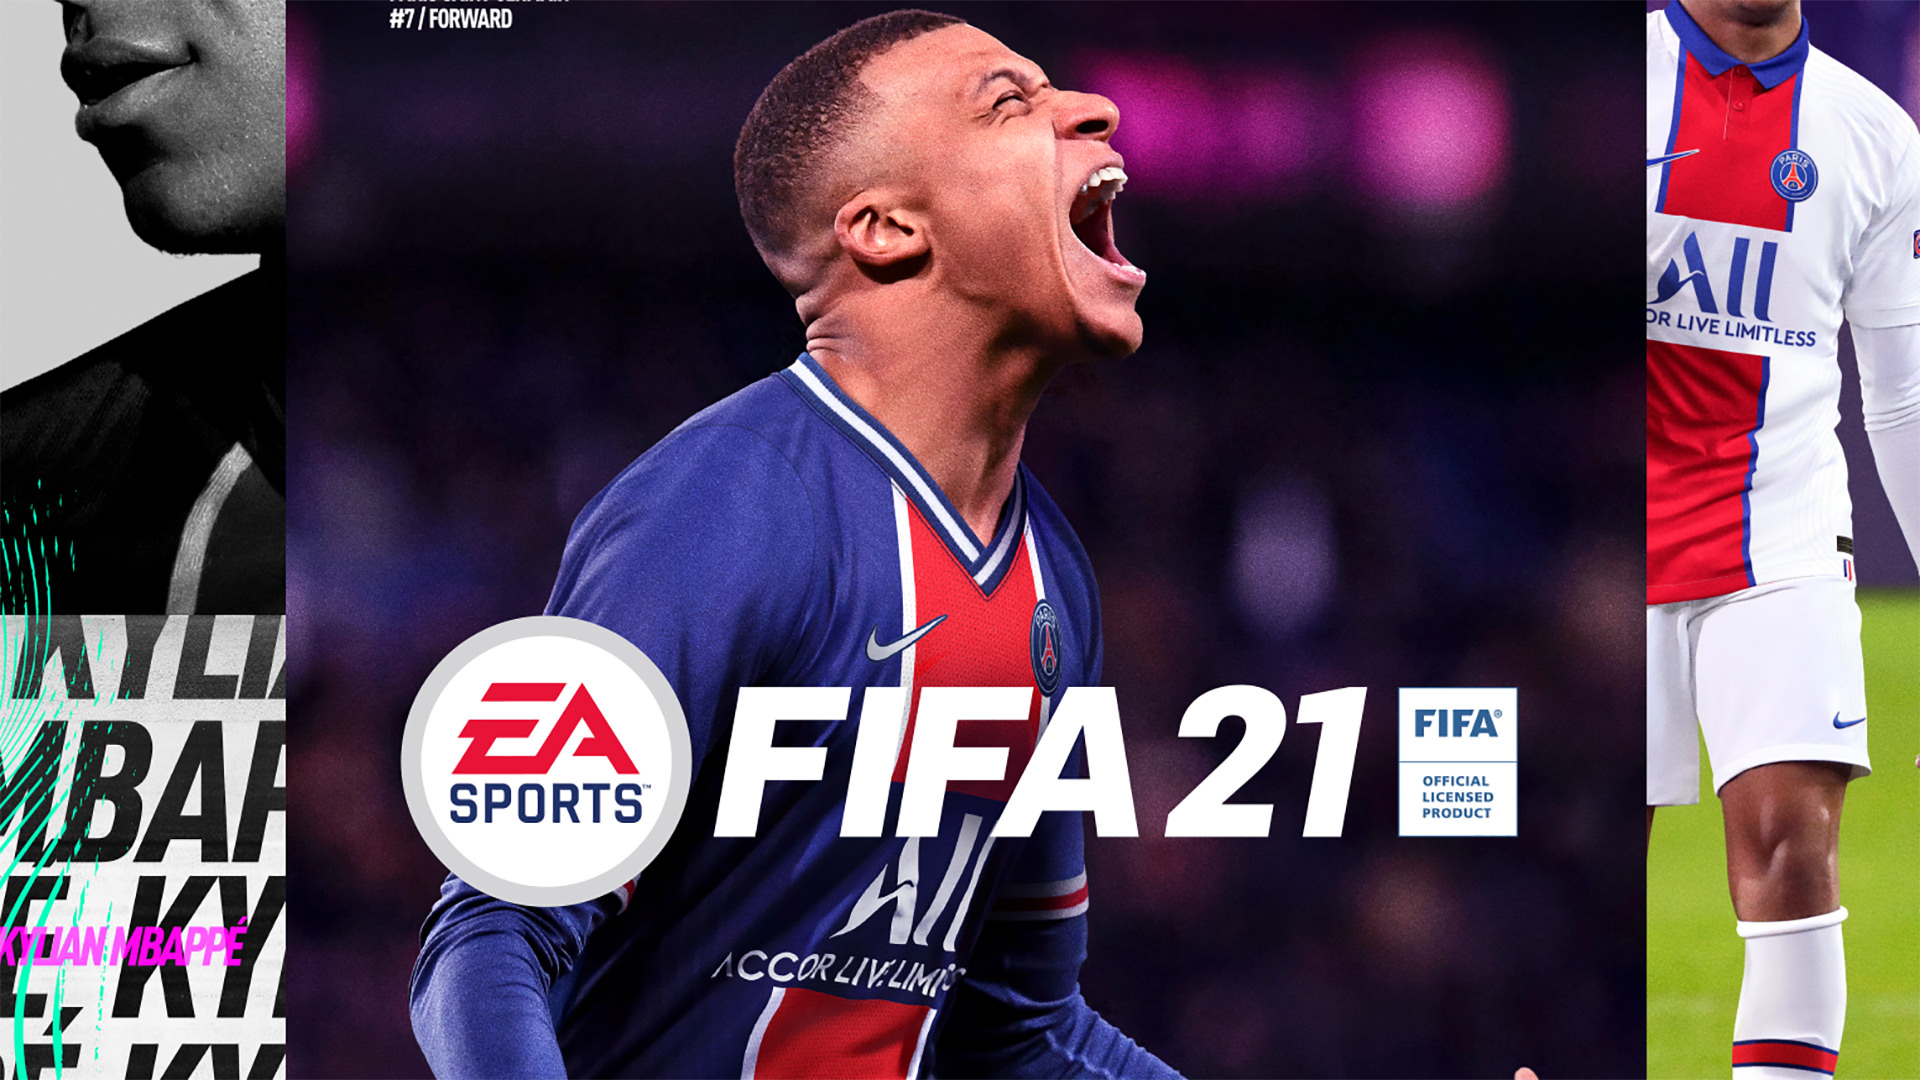 EA به اتهام استفاده غیرقانونی از اسامی و چهره بازیکنان در FIFA 21 واکنش نشان داد